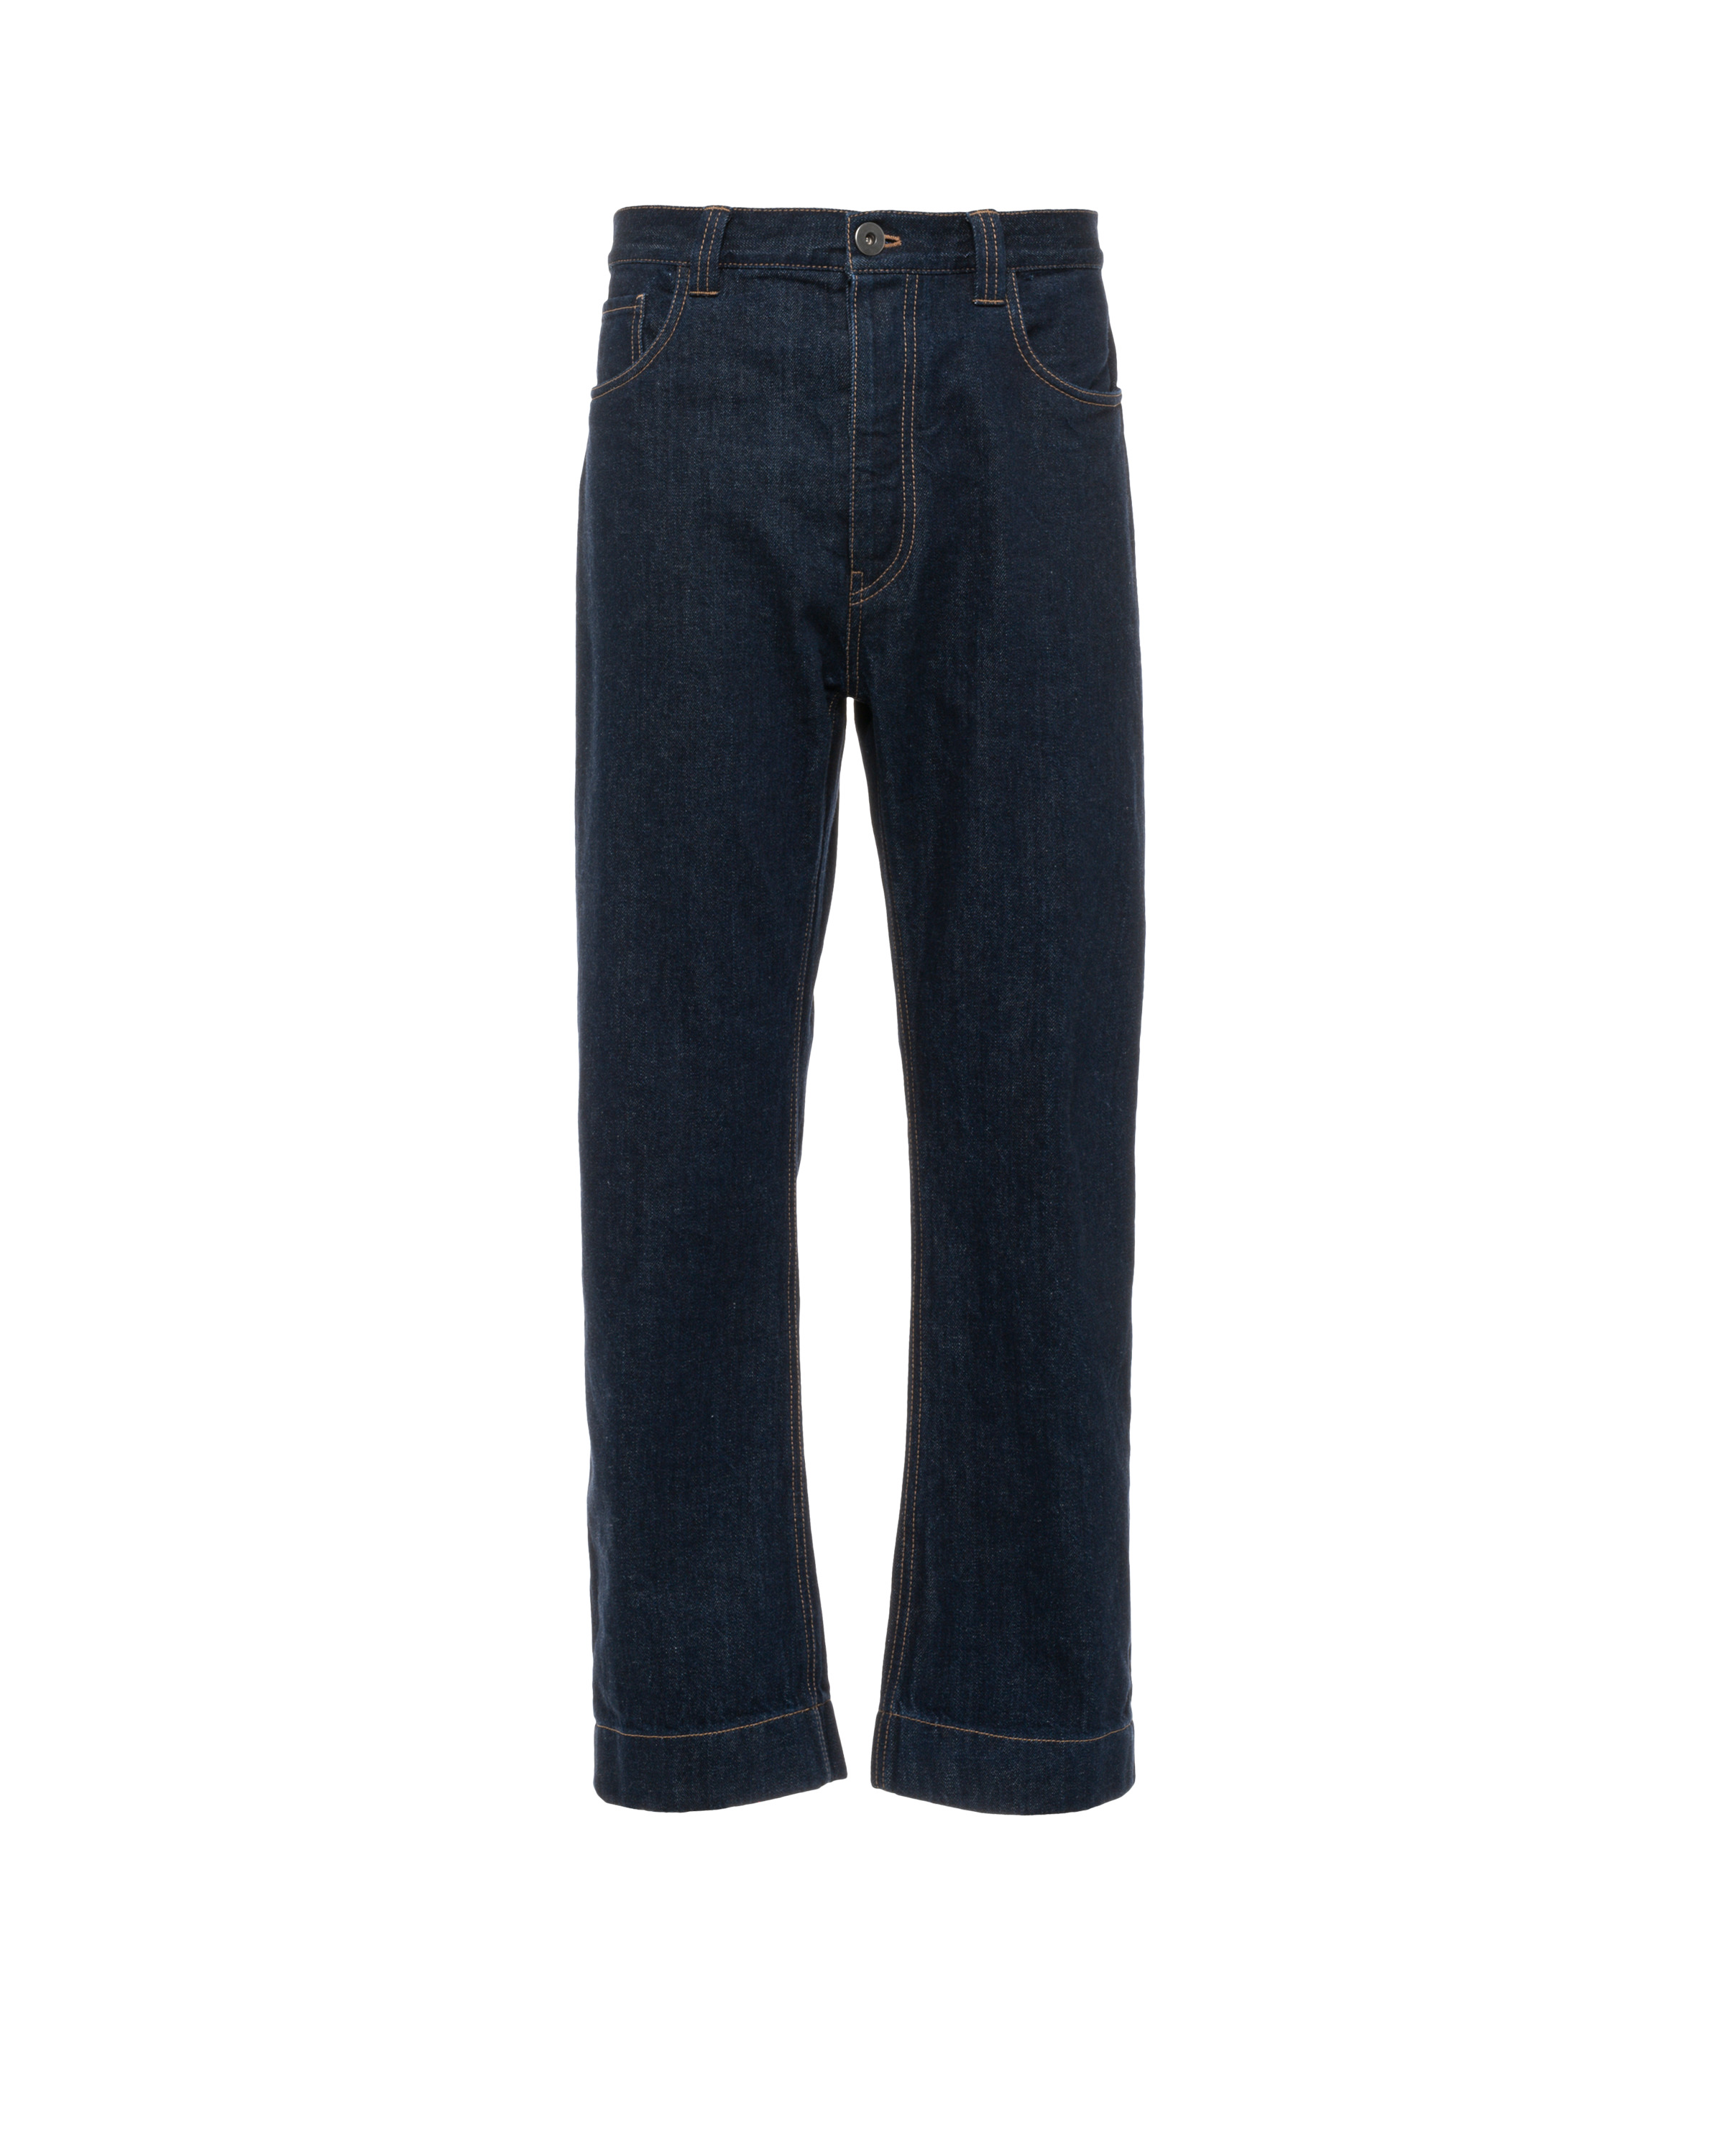 Indigo denim five-pocket jeans - 1